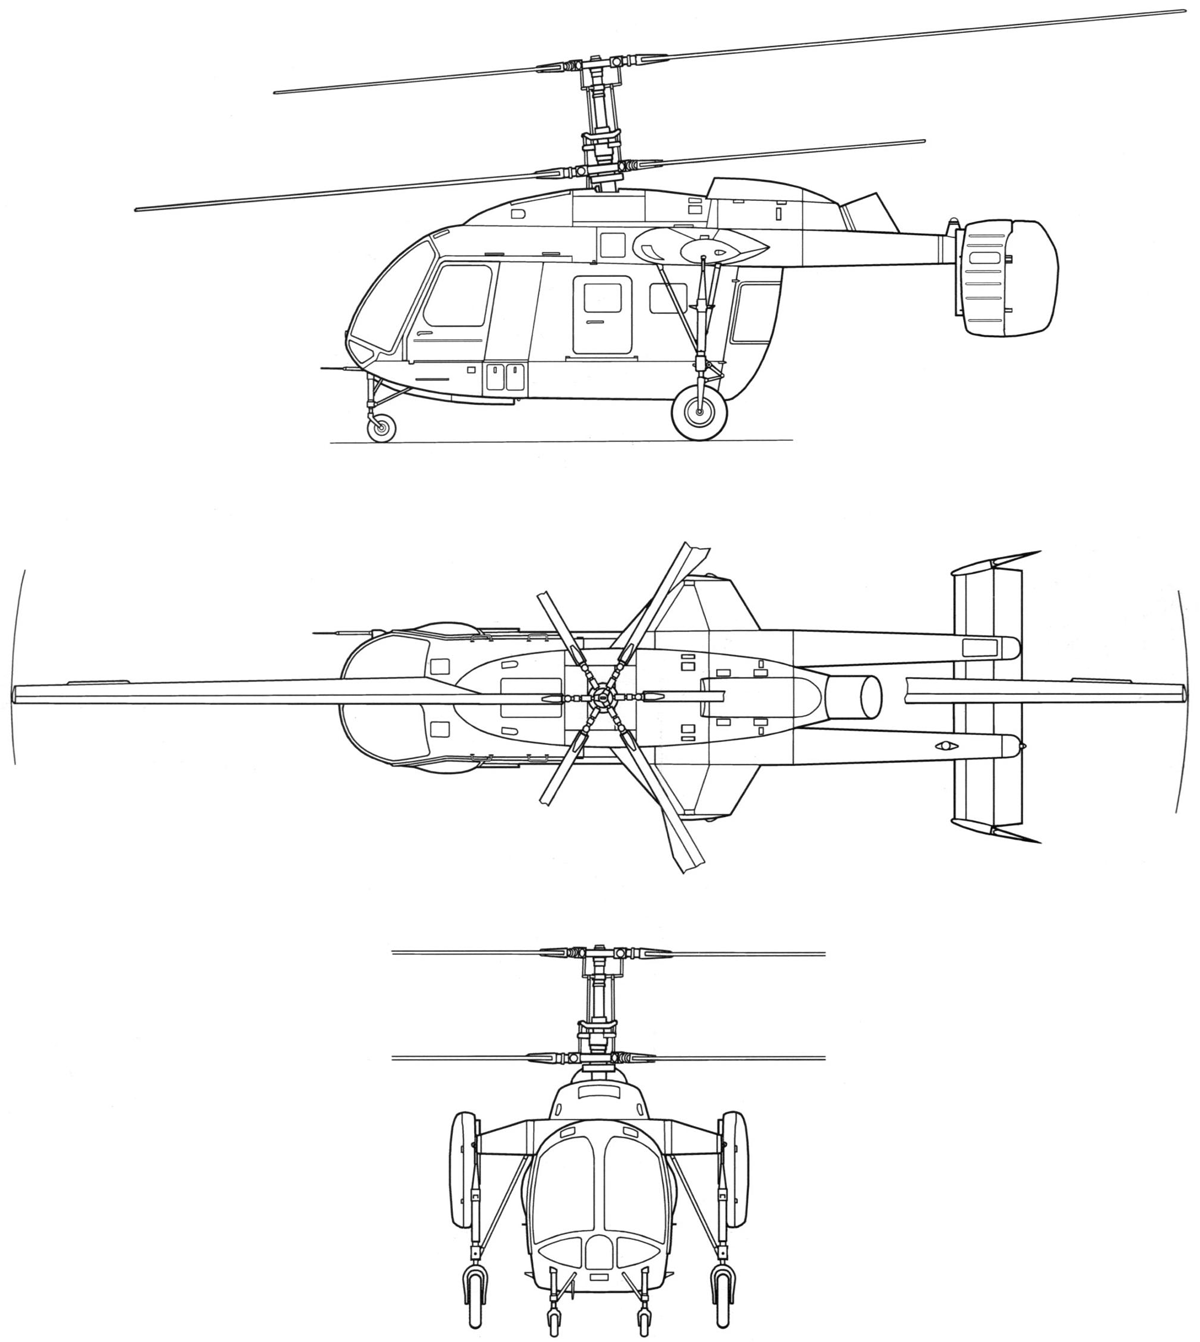 Ка-26 — вертолёт-трансформер